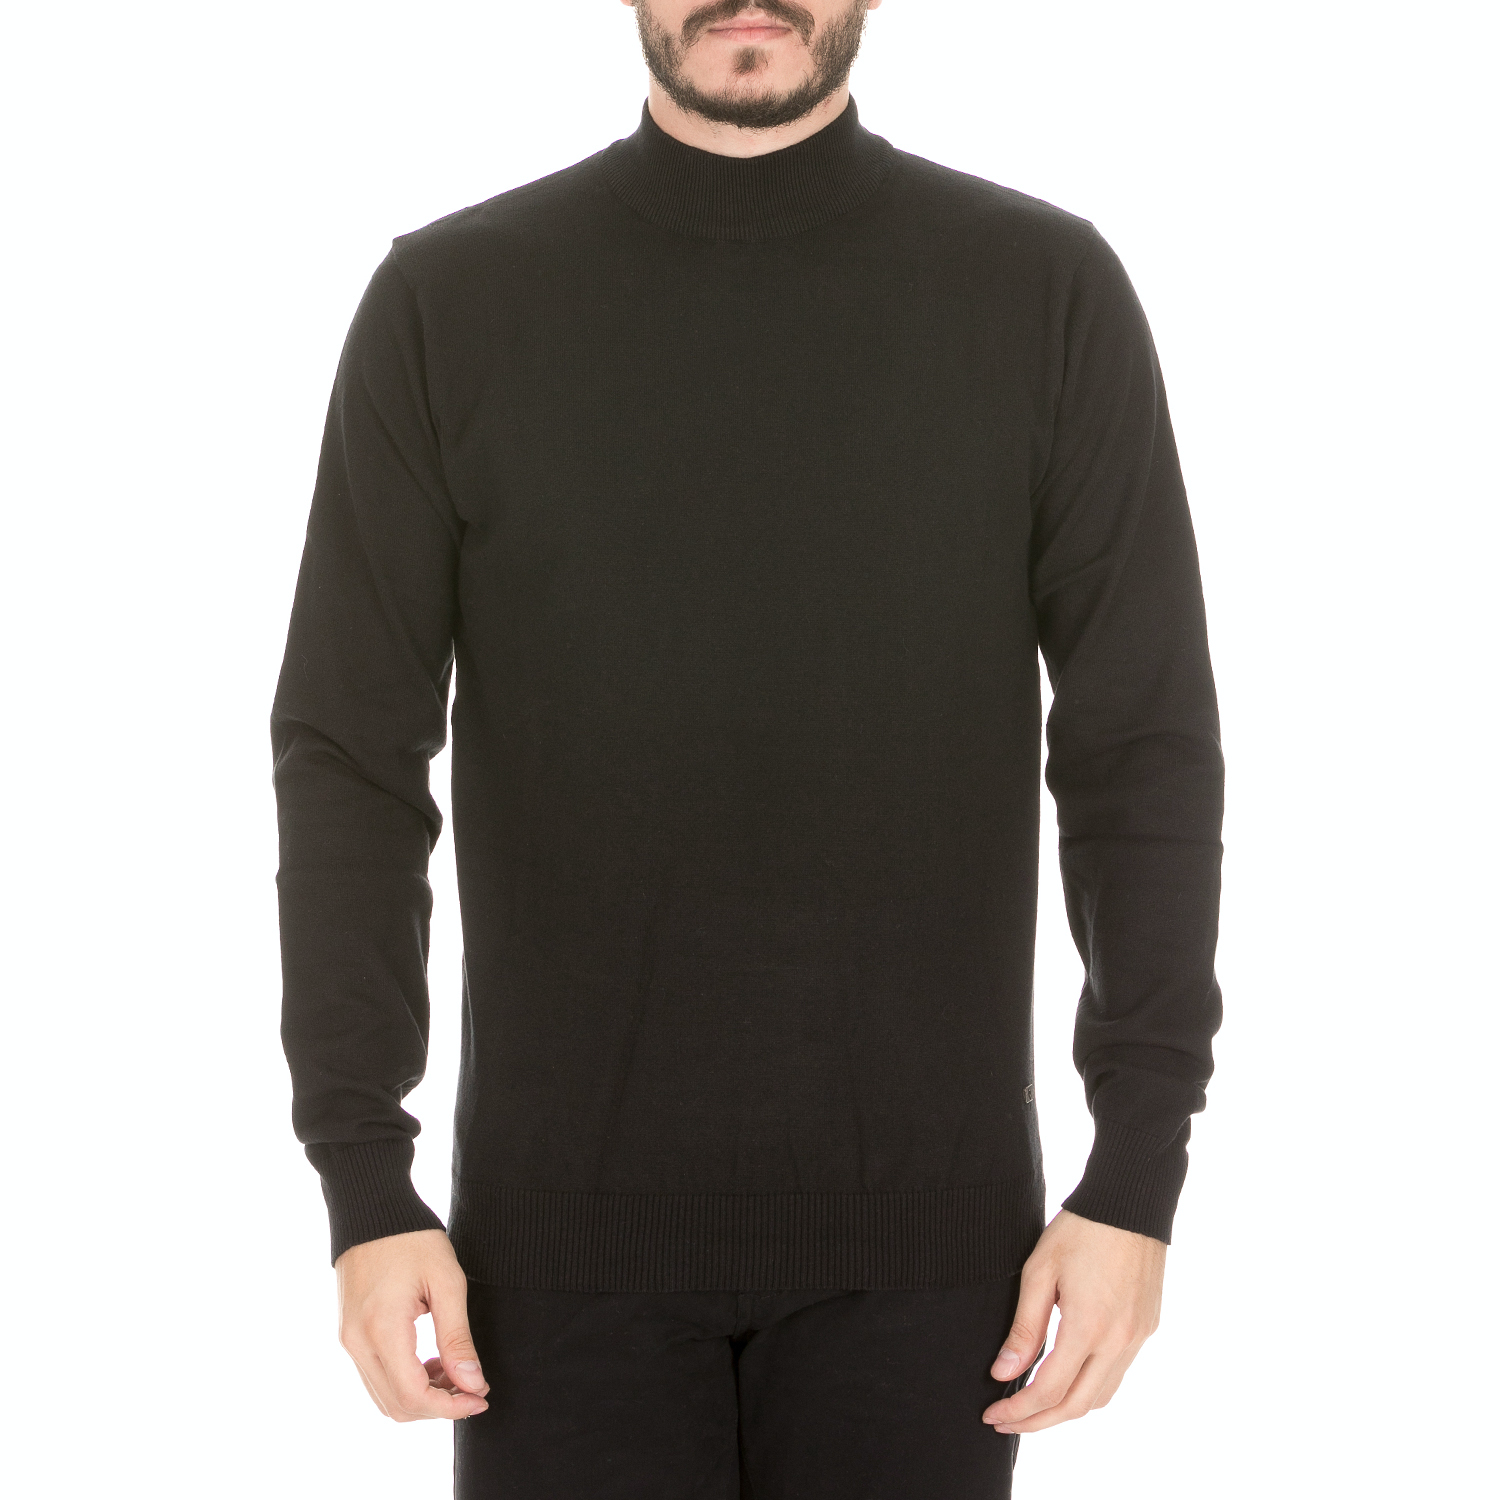 BATTERY - Ανδρική πλεκτή μπλούζα BATTERY μαύρη Ανδρικά/Ρούχα/Πλεκτά-Ζακέτες/Πουλόβερ